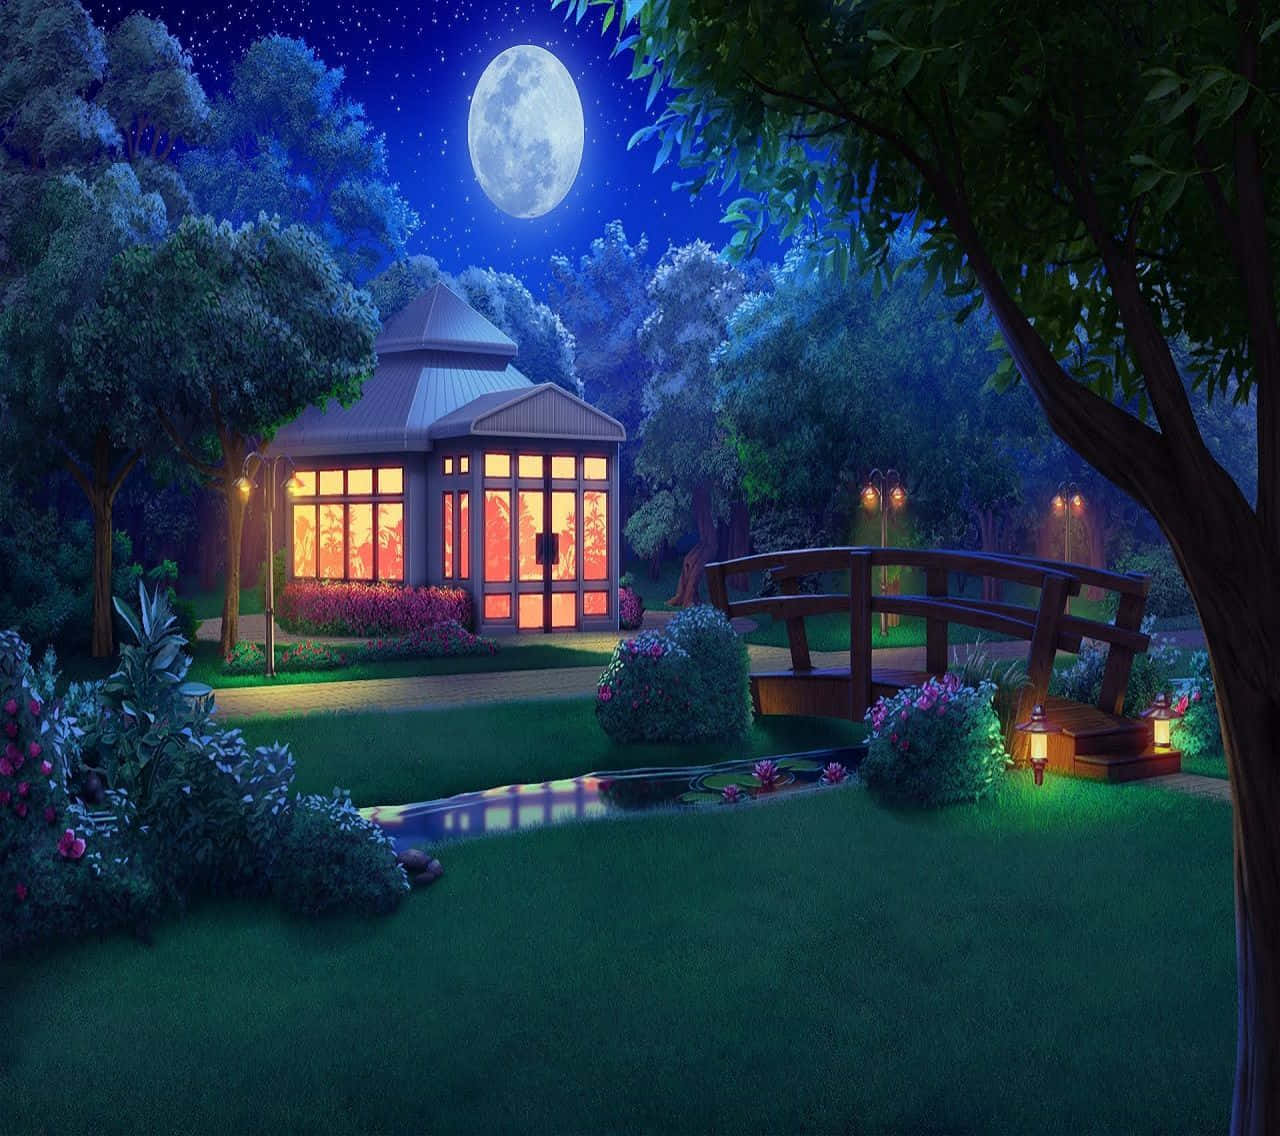 Big moon anime girl night outdoor wallpaper background - pling.com